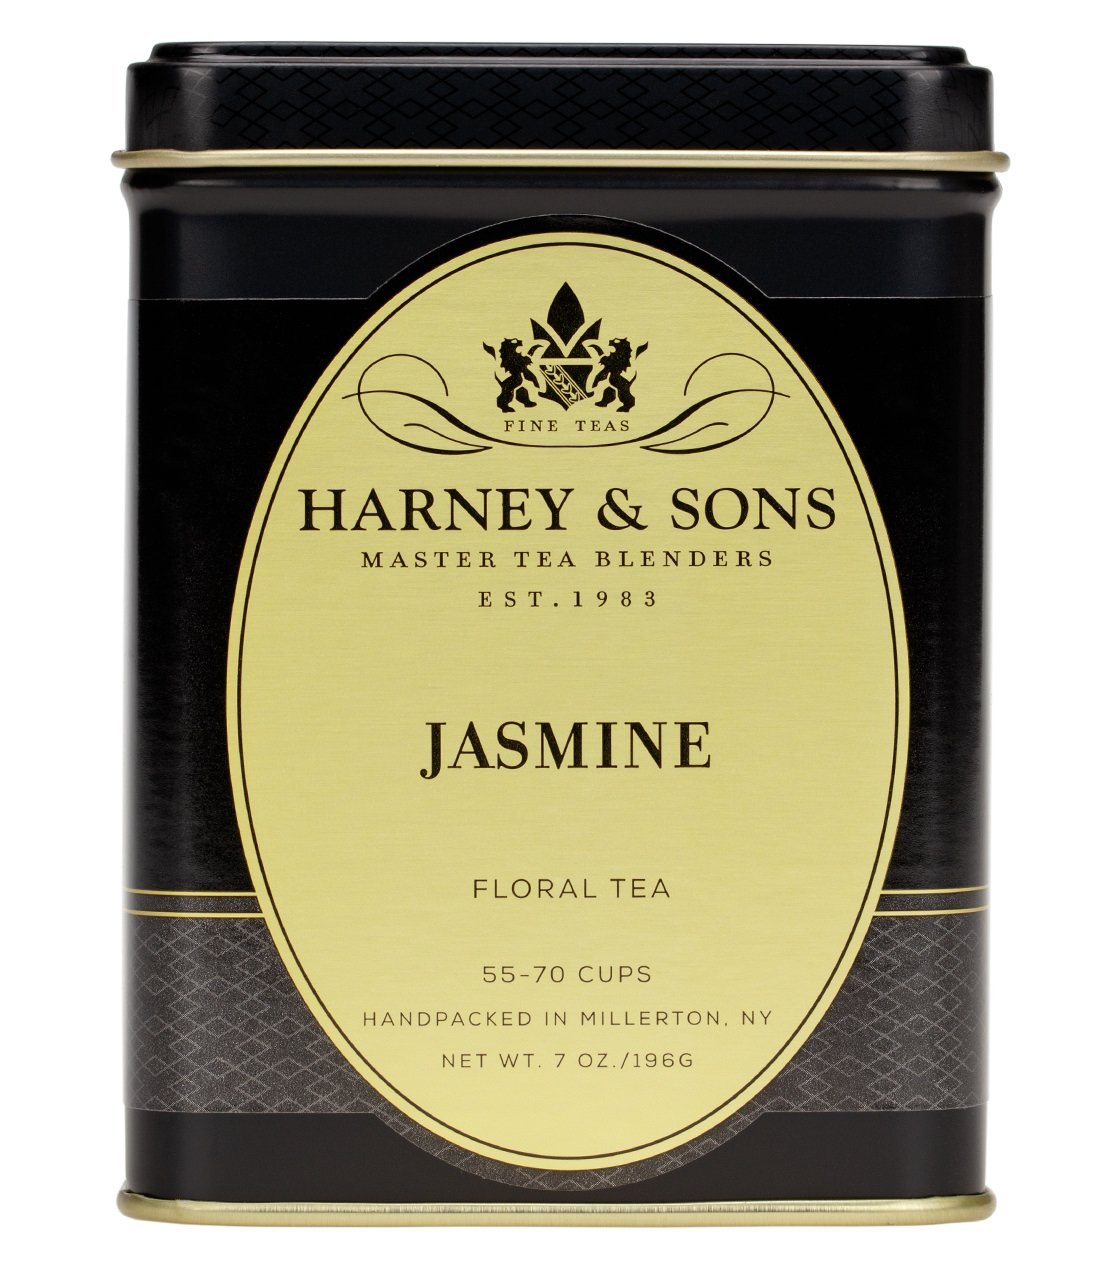 Jasmine - Harney & Sons Teas, European Distribution Center